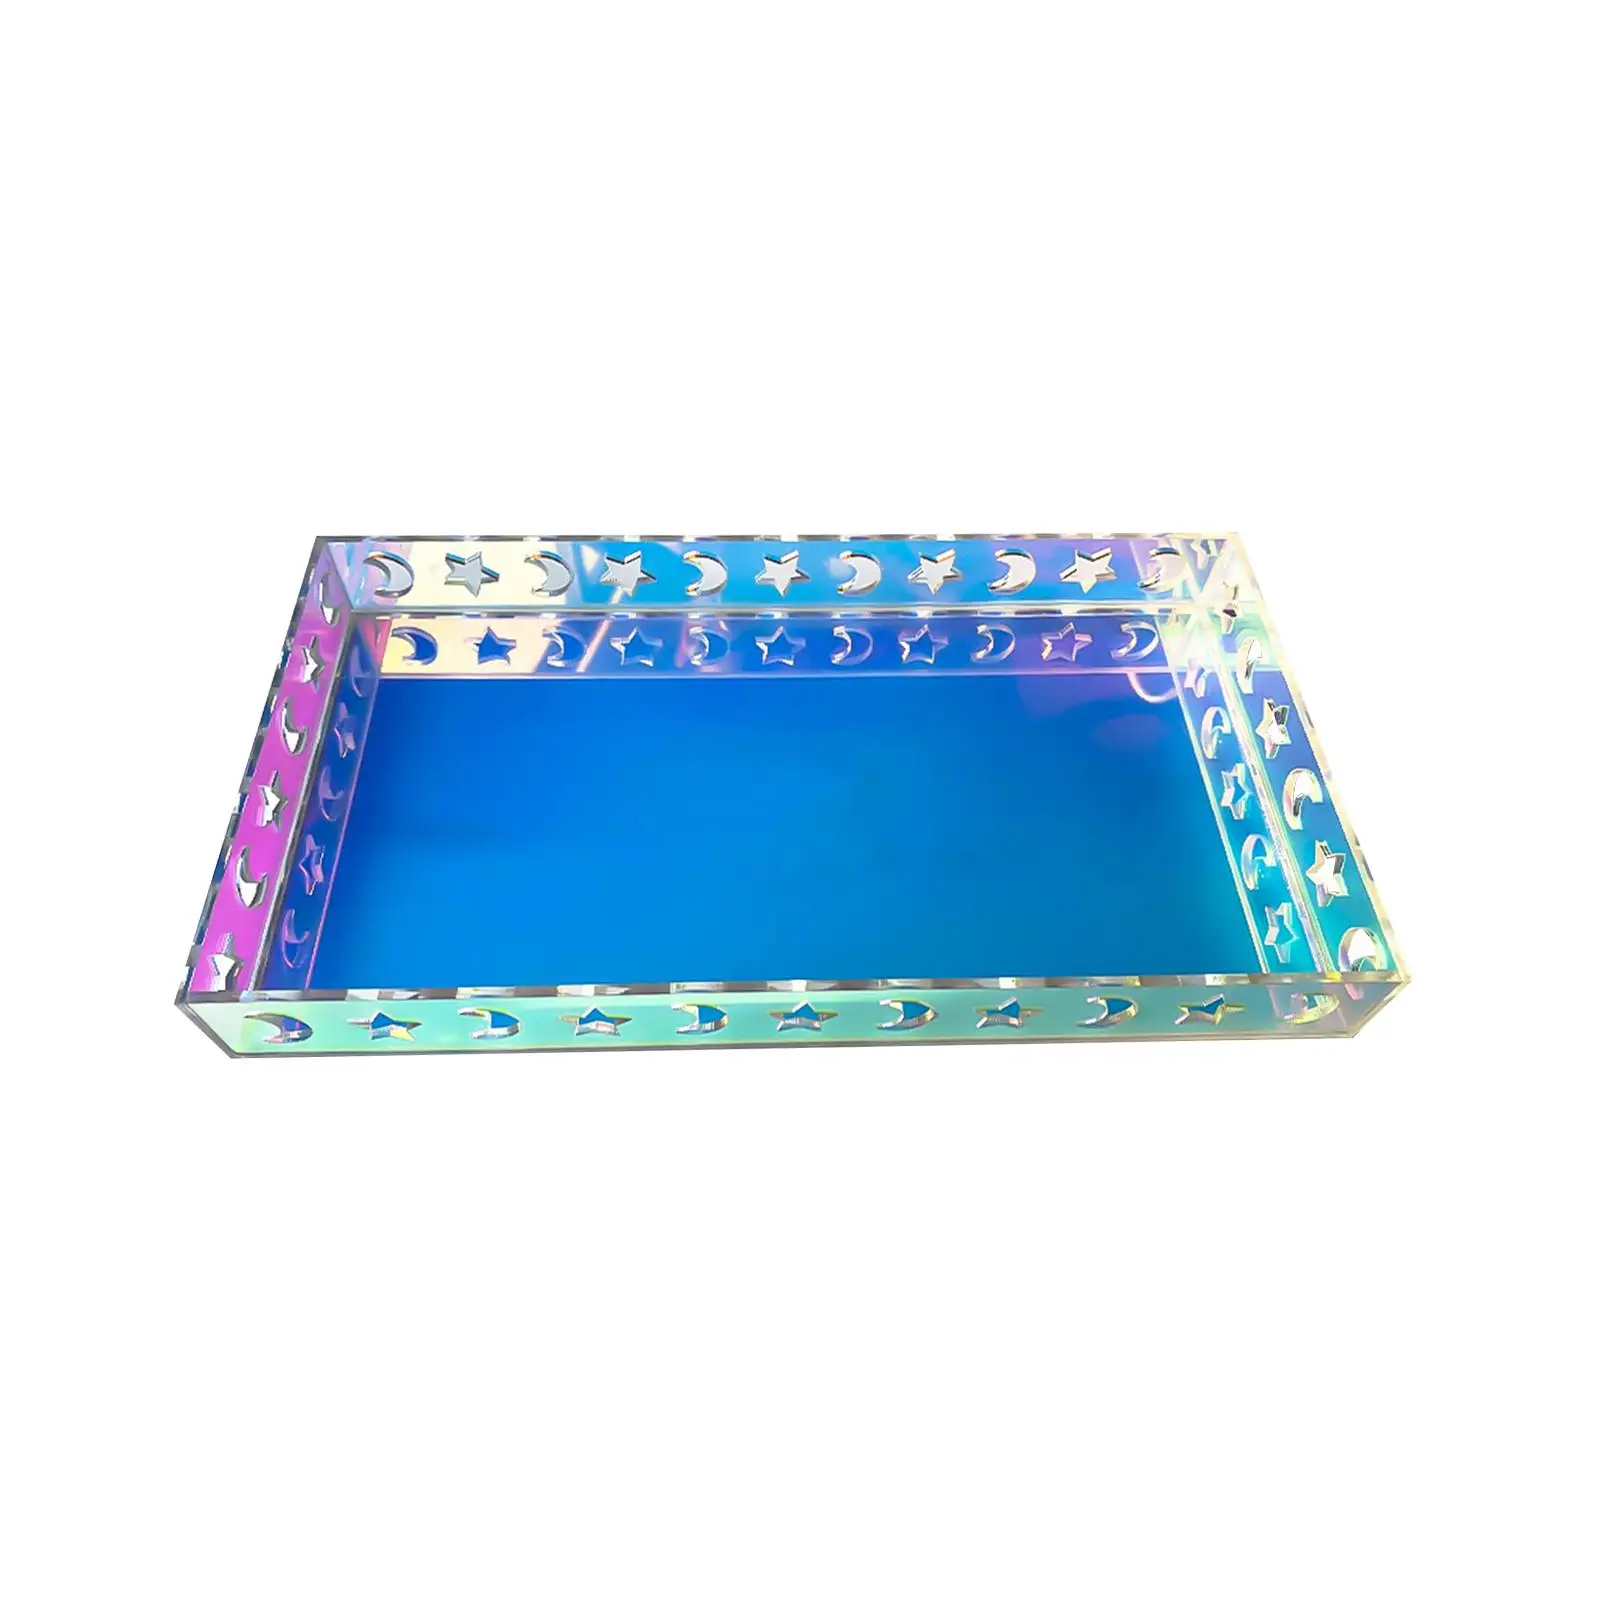 Iridescent Acrylic Bathroom Tray Jewelry Display Holder Dessert Plate Vanity